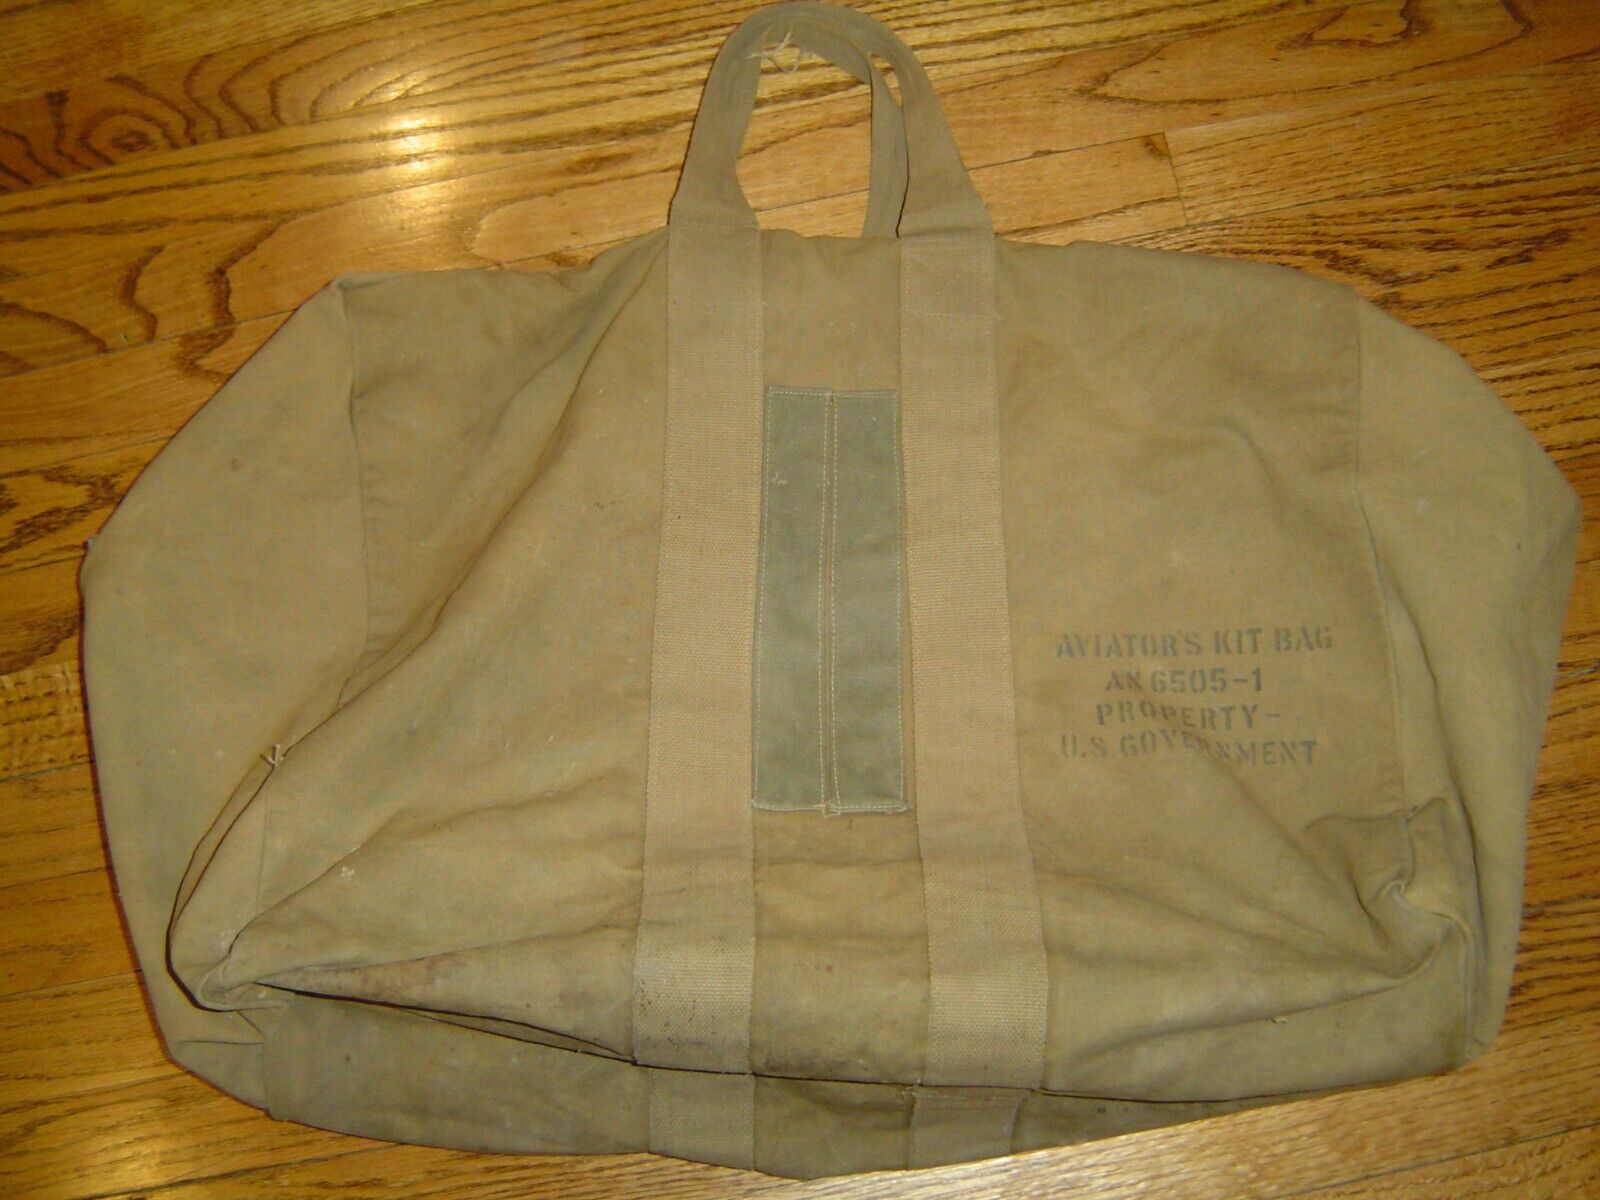 Vintage Aviator Kit Bag Canvas 40s Green Duffle Bag 23x17